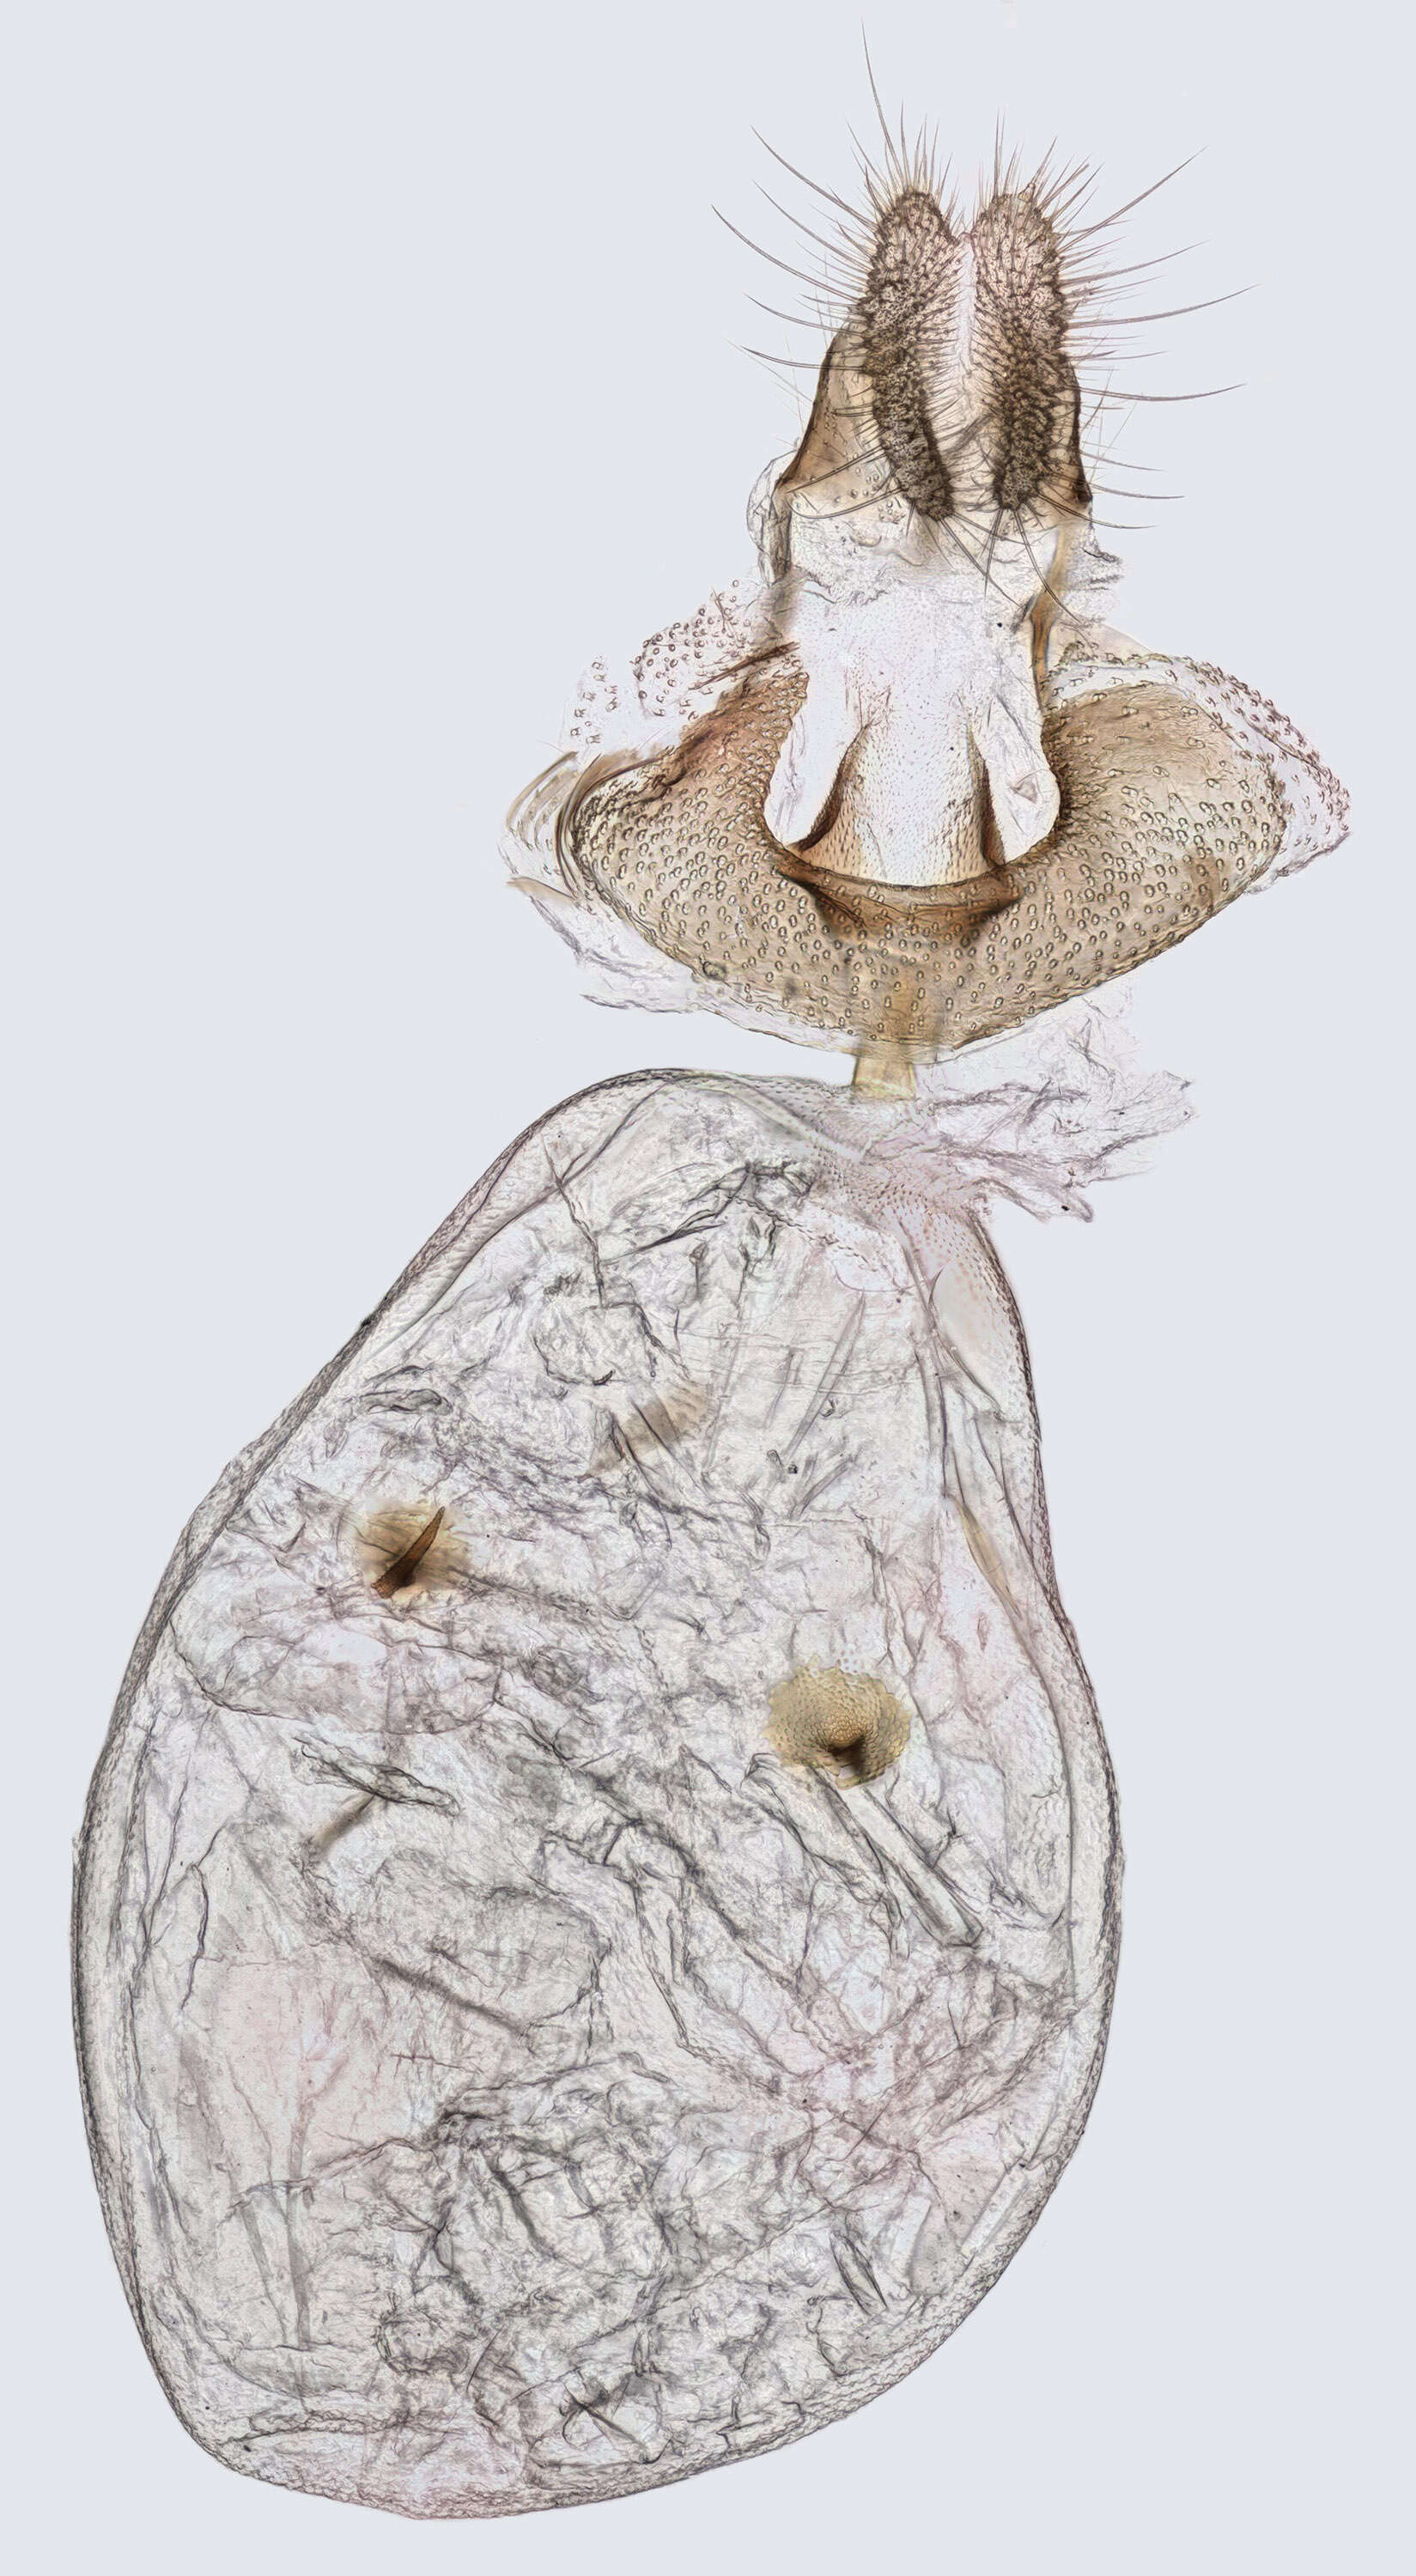 Image of Pammene trauniana Schiffermüller 1775